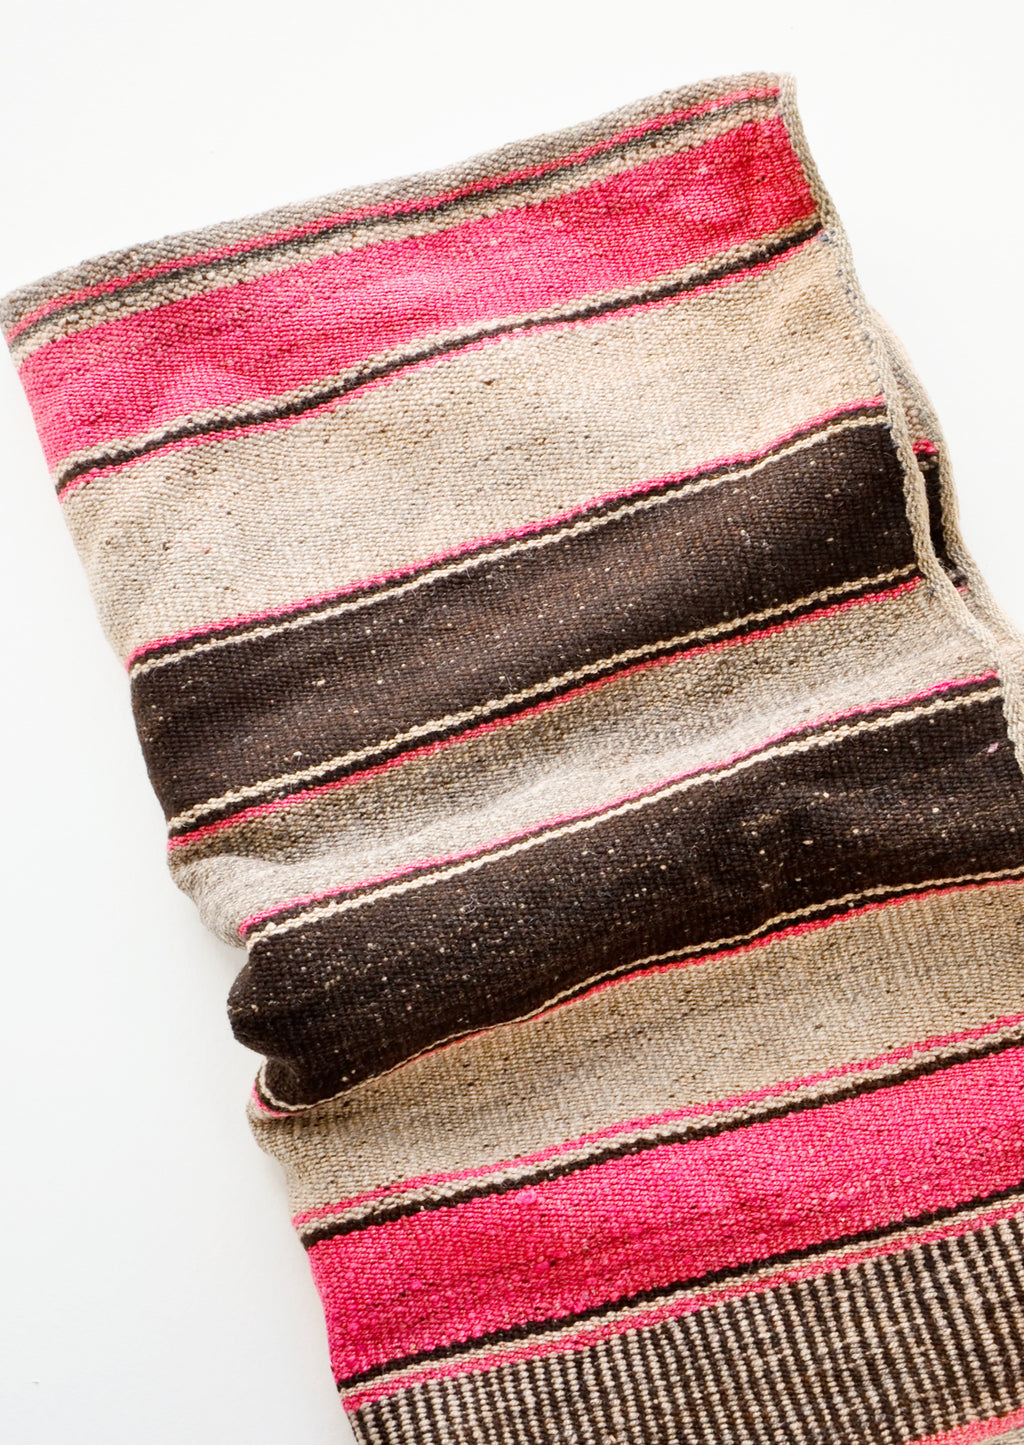 2: Vintage wool textile in pink, tan & brown striped pattern